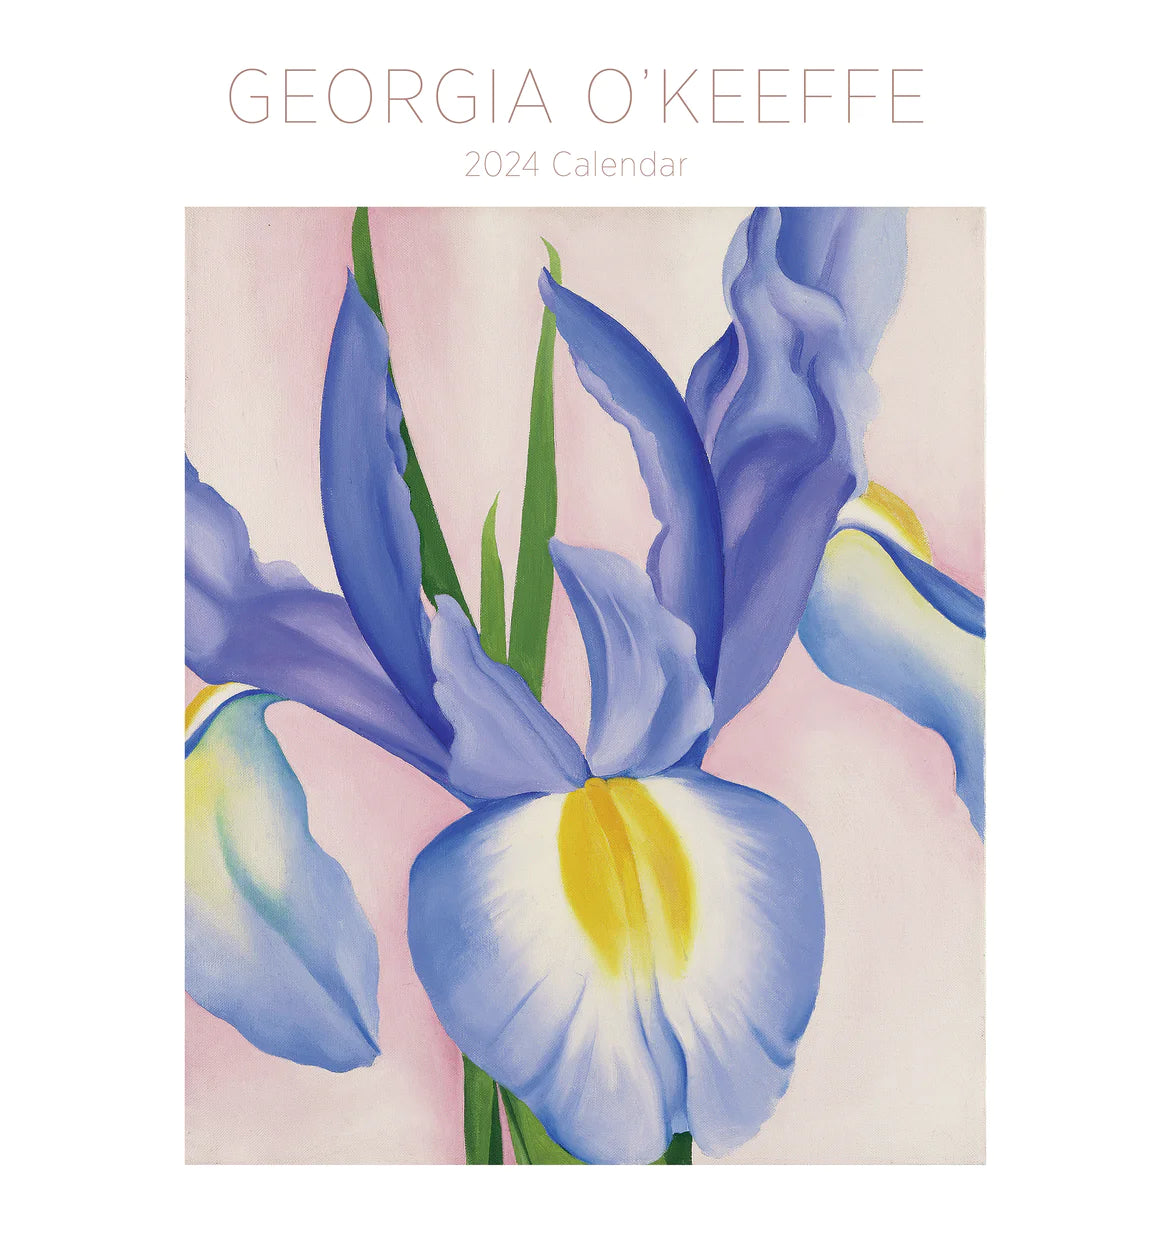 2024 Georgia O'Keeffe Wall Calendar